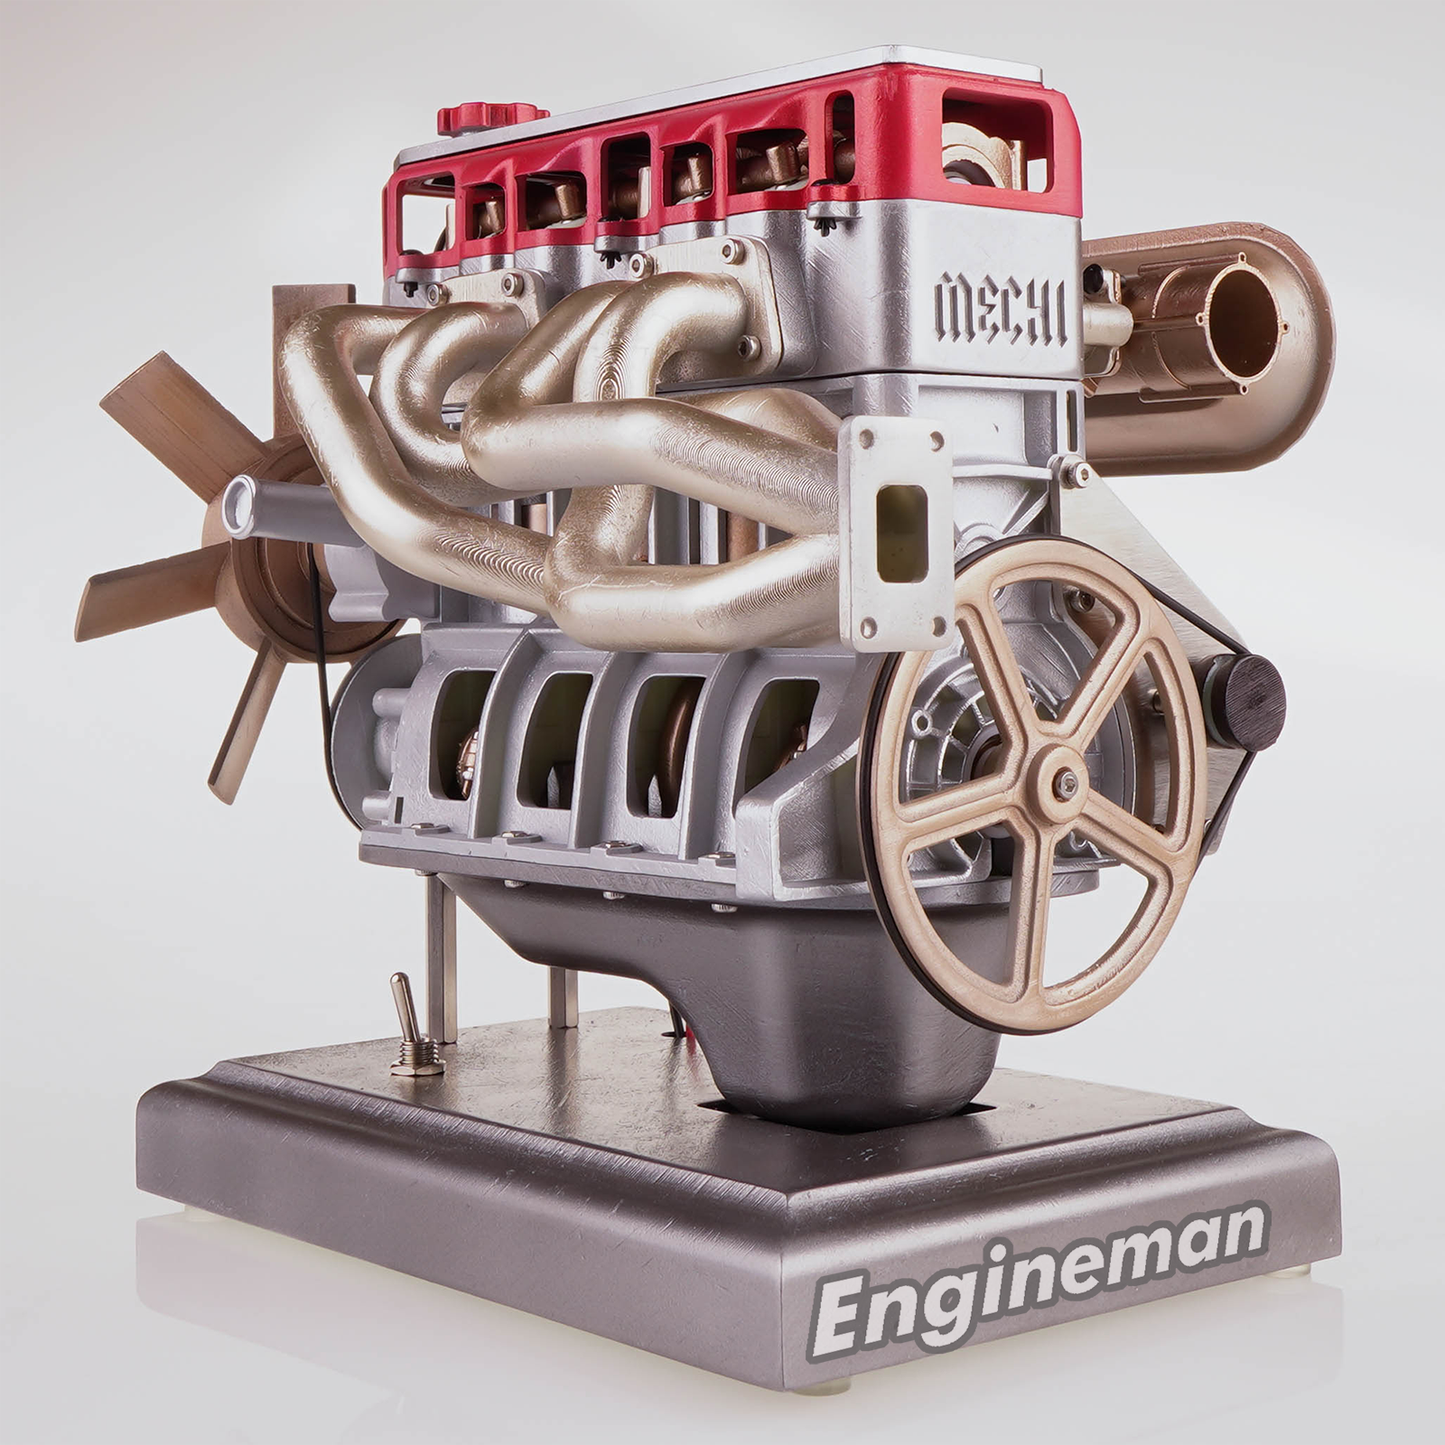 L4 Engine Straight-four Inline four cylinder piston engine--Runnable